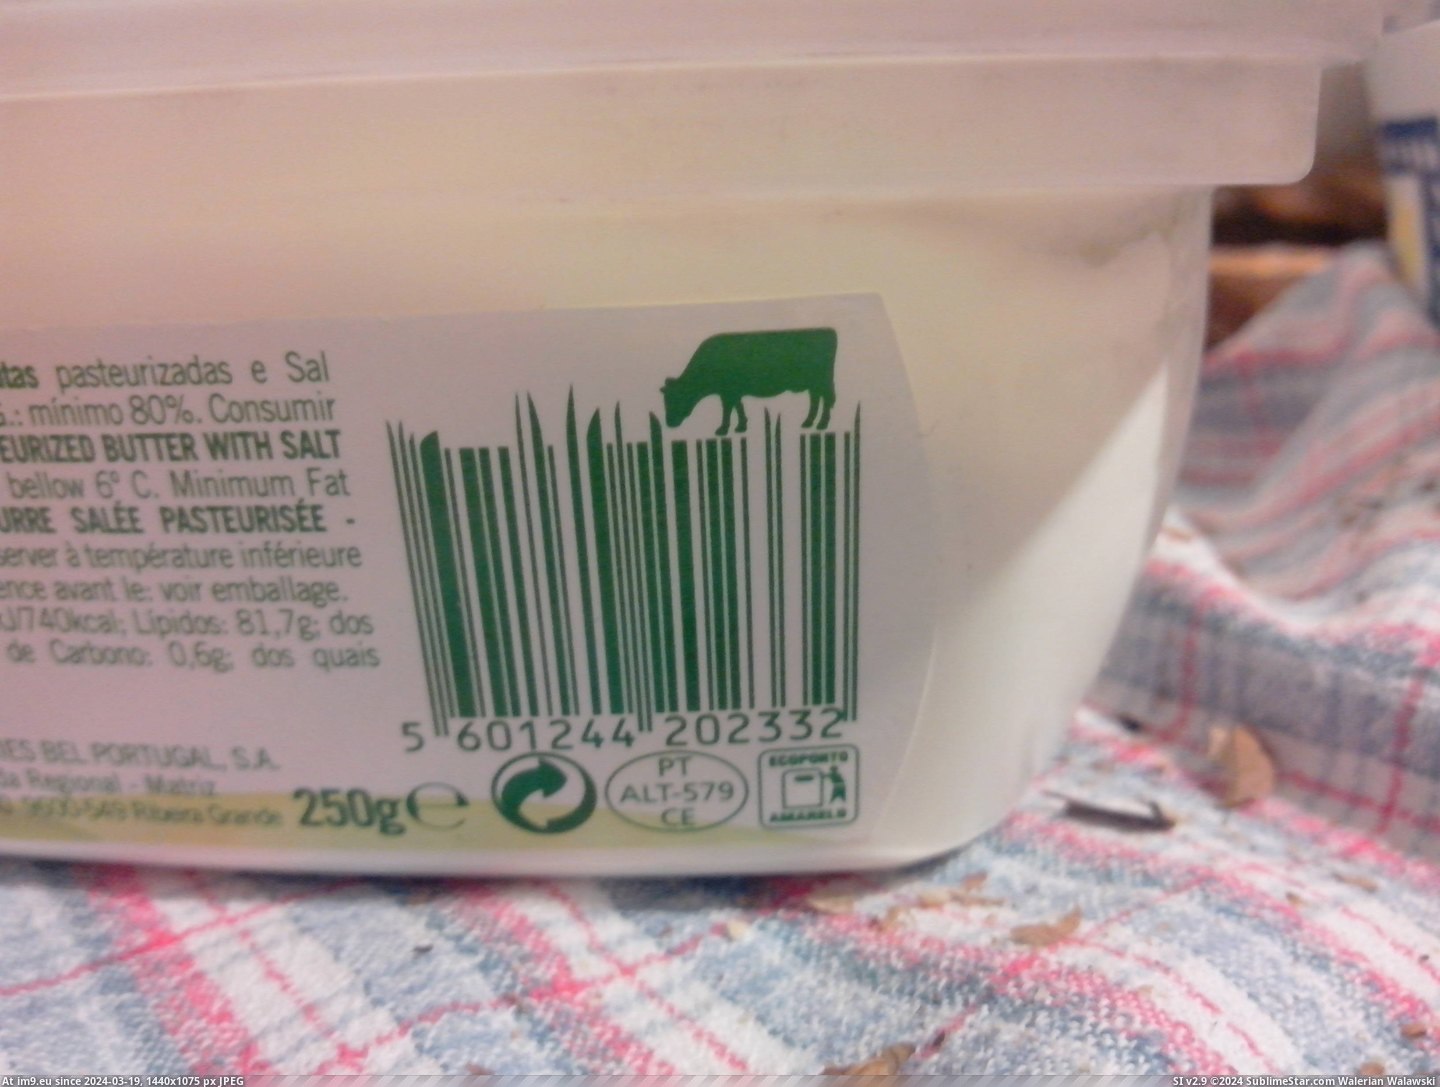 #Cow #Butter #Barcode #Eaten [Mildlyinteresting] This butter's barcode is being eaten by a cow Pic. (Bild von album My r/MILDLYINTERESTING favs))